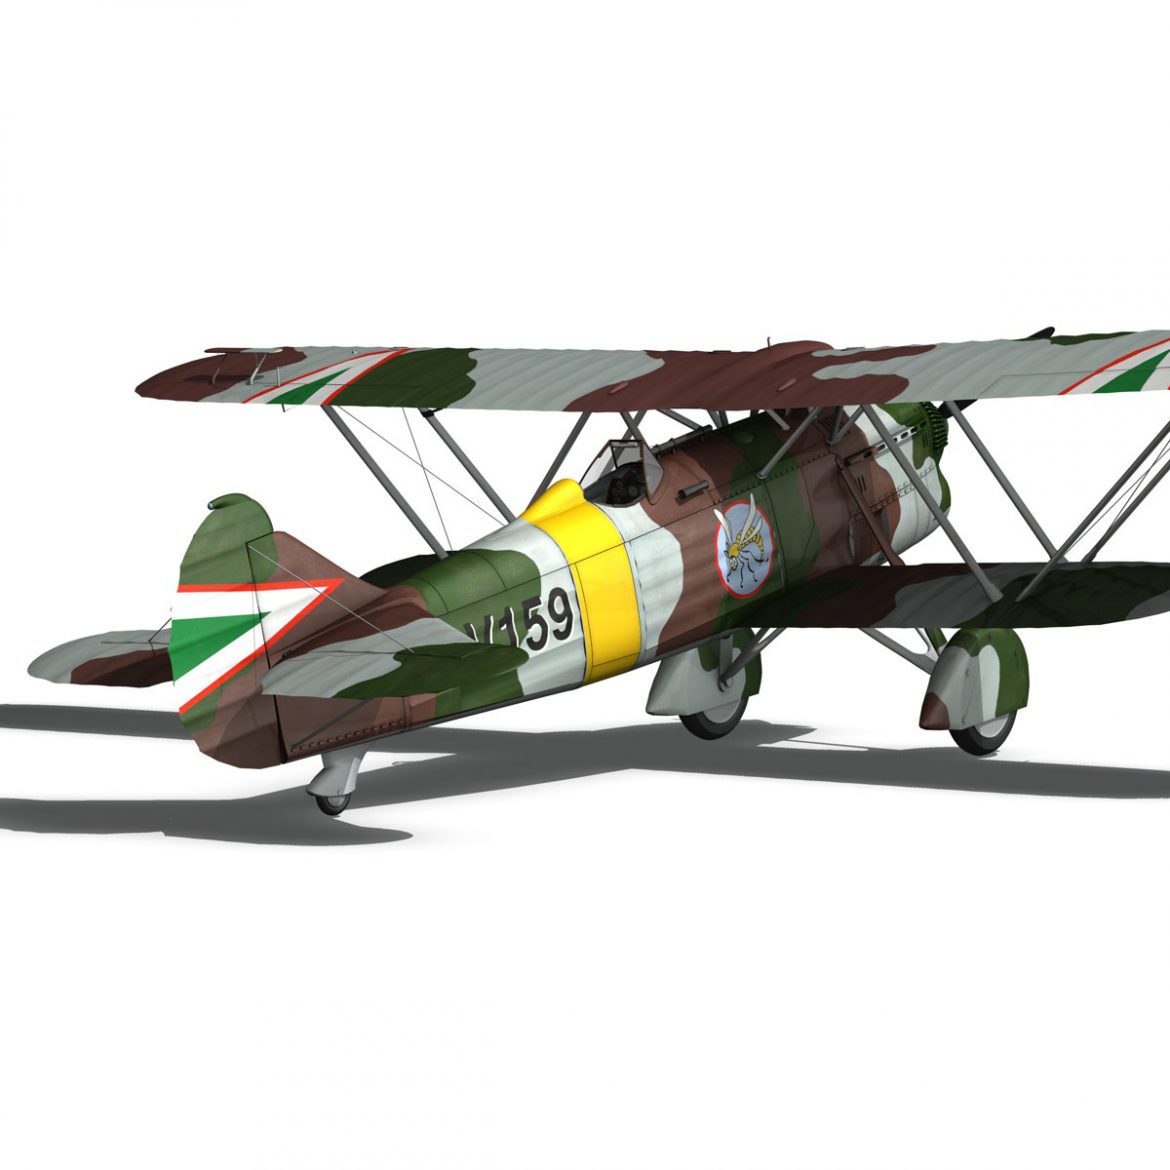 fiat cr.32 – hungarian royal air force – v159 3d model fbx c4d lwo obj 299973